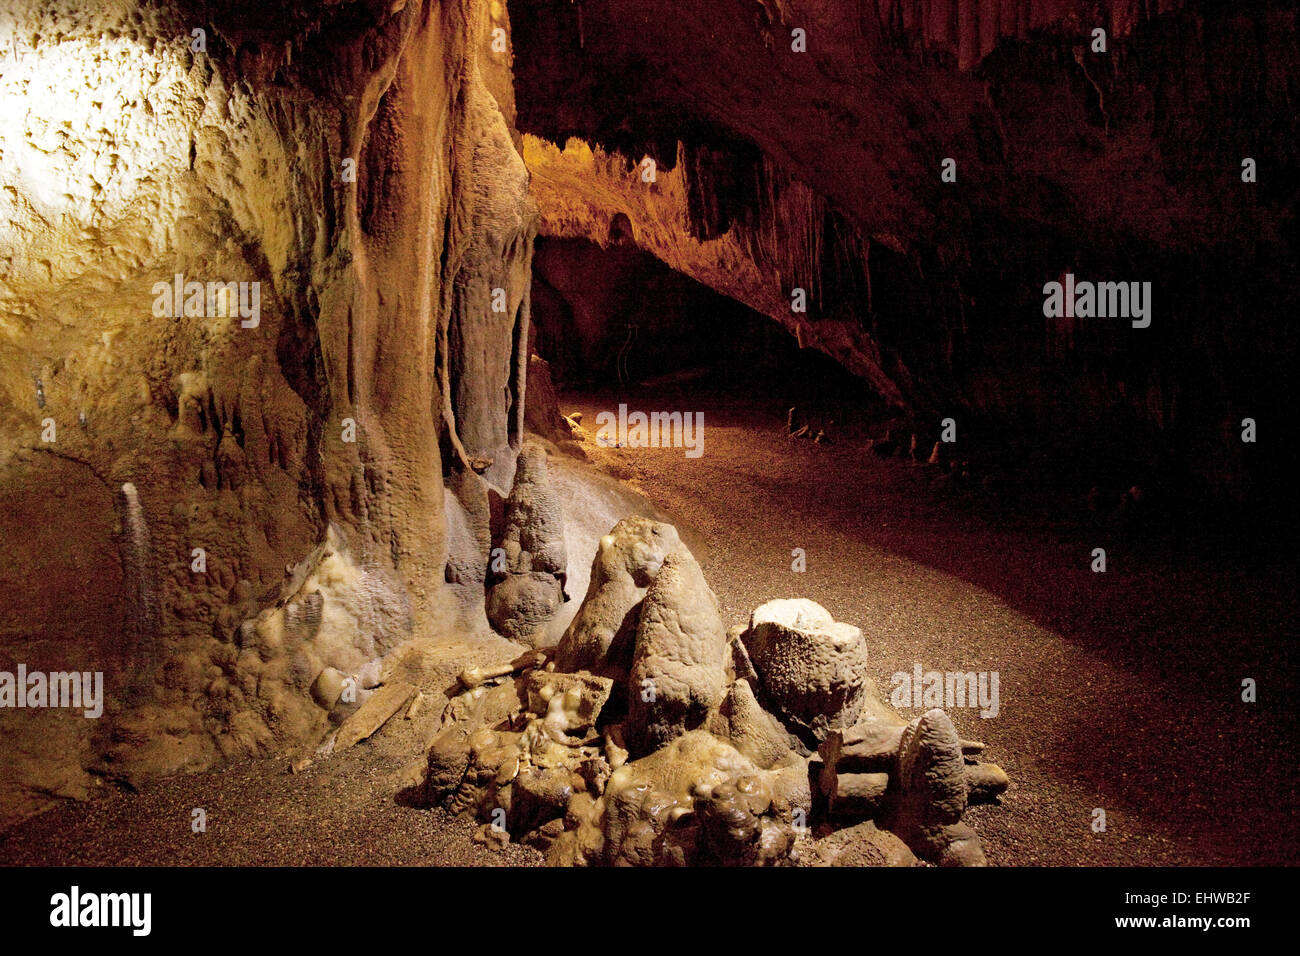 The Dechen Cave in Iserlohn in Germany. Stock Photo